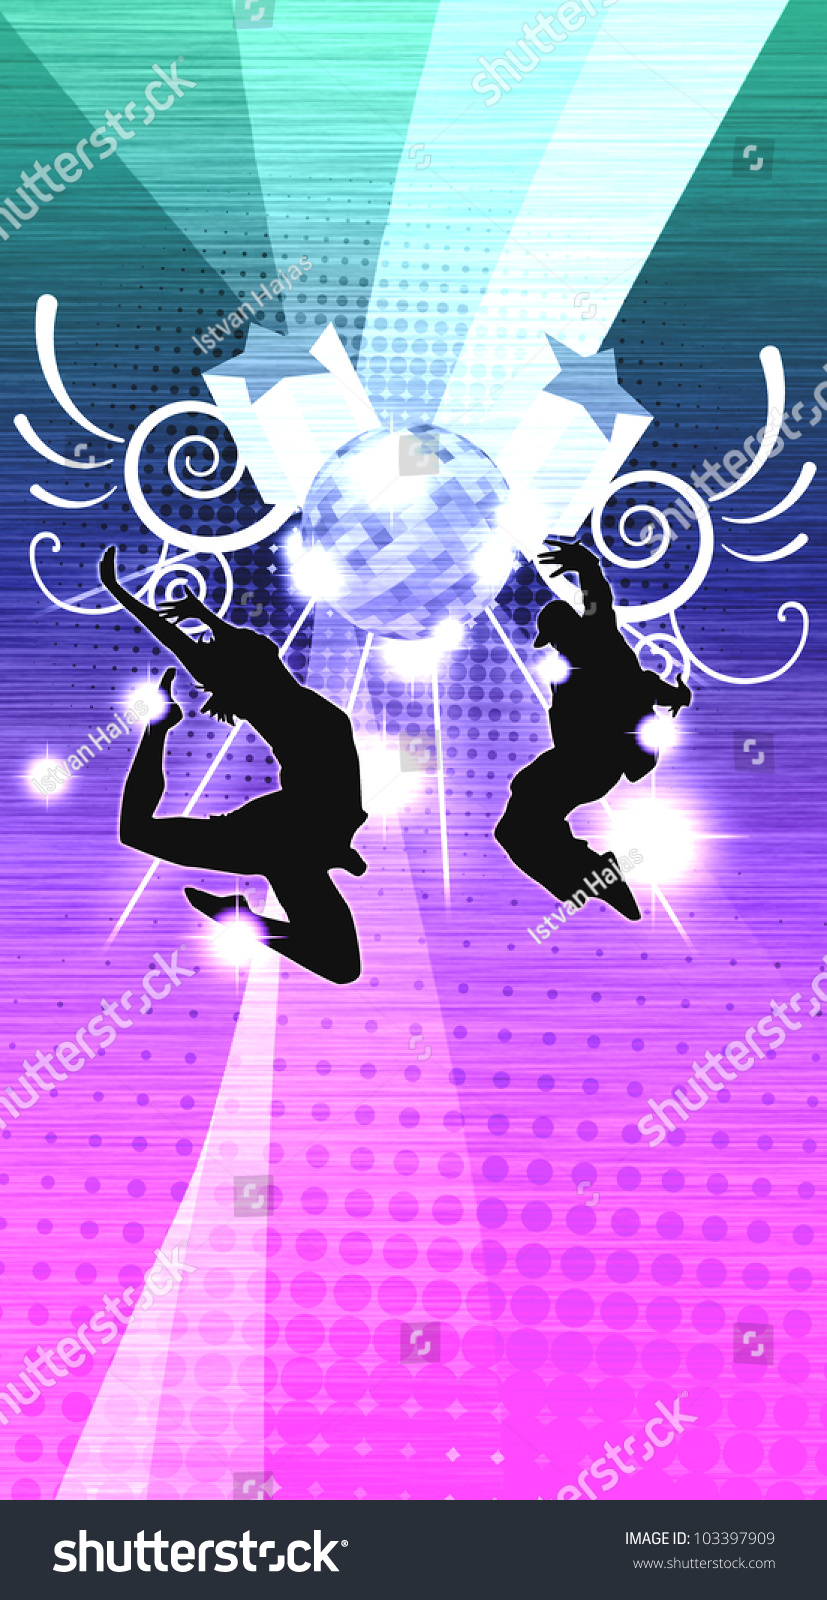 Street Dance Background (Poster, Web, Leaflet, Magazine) Stock Photo ...